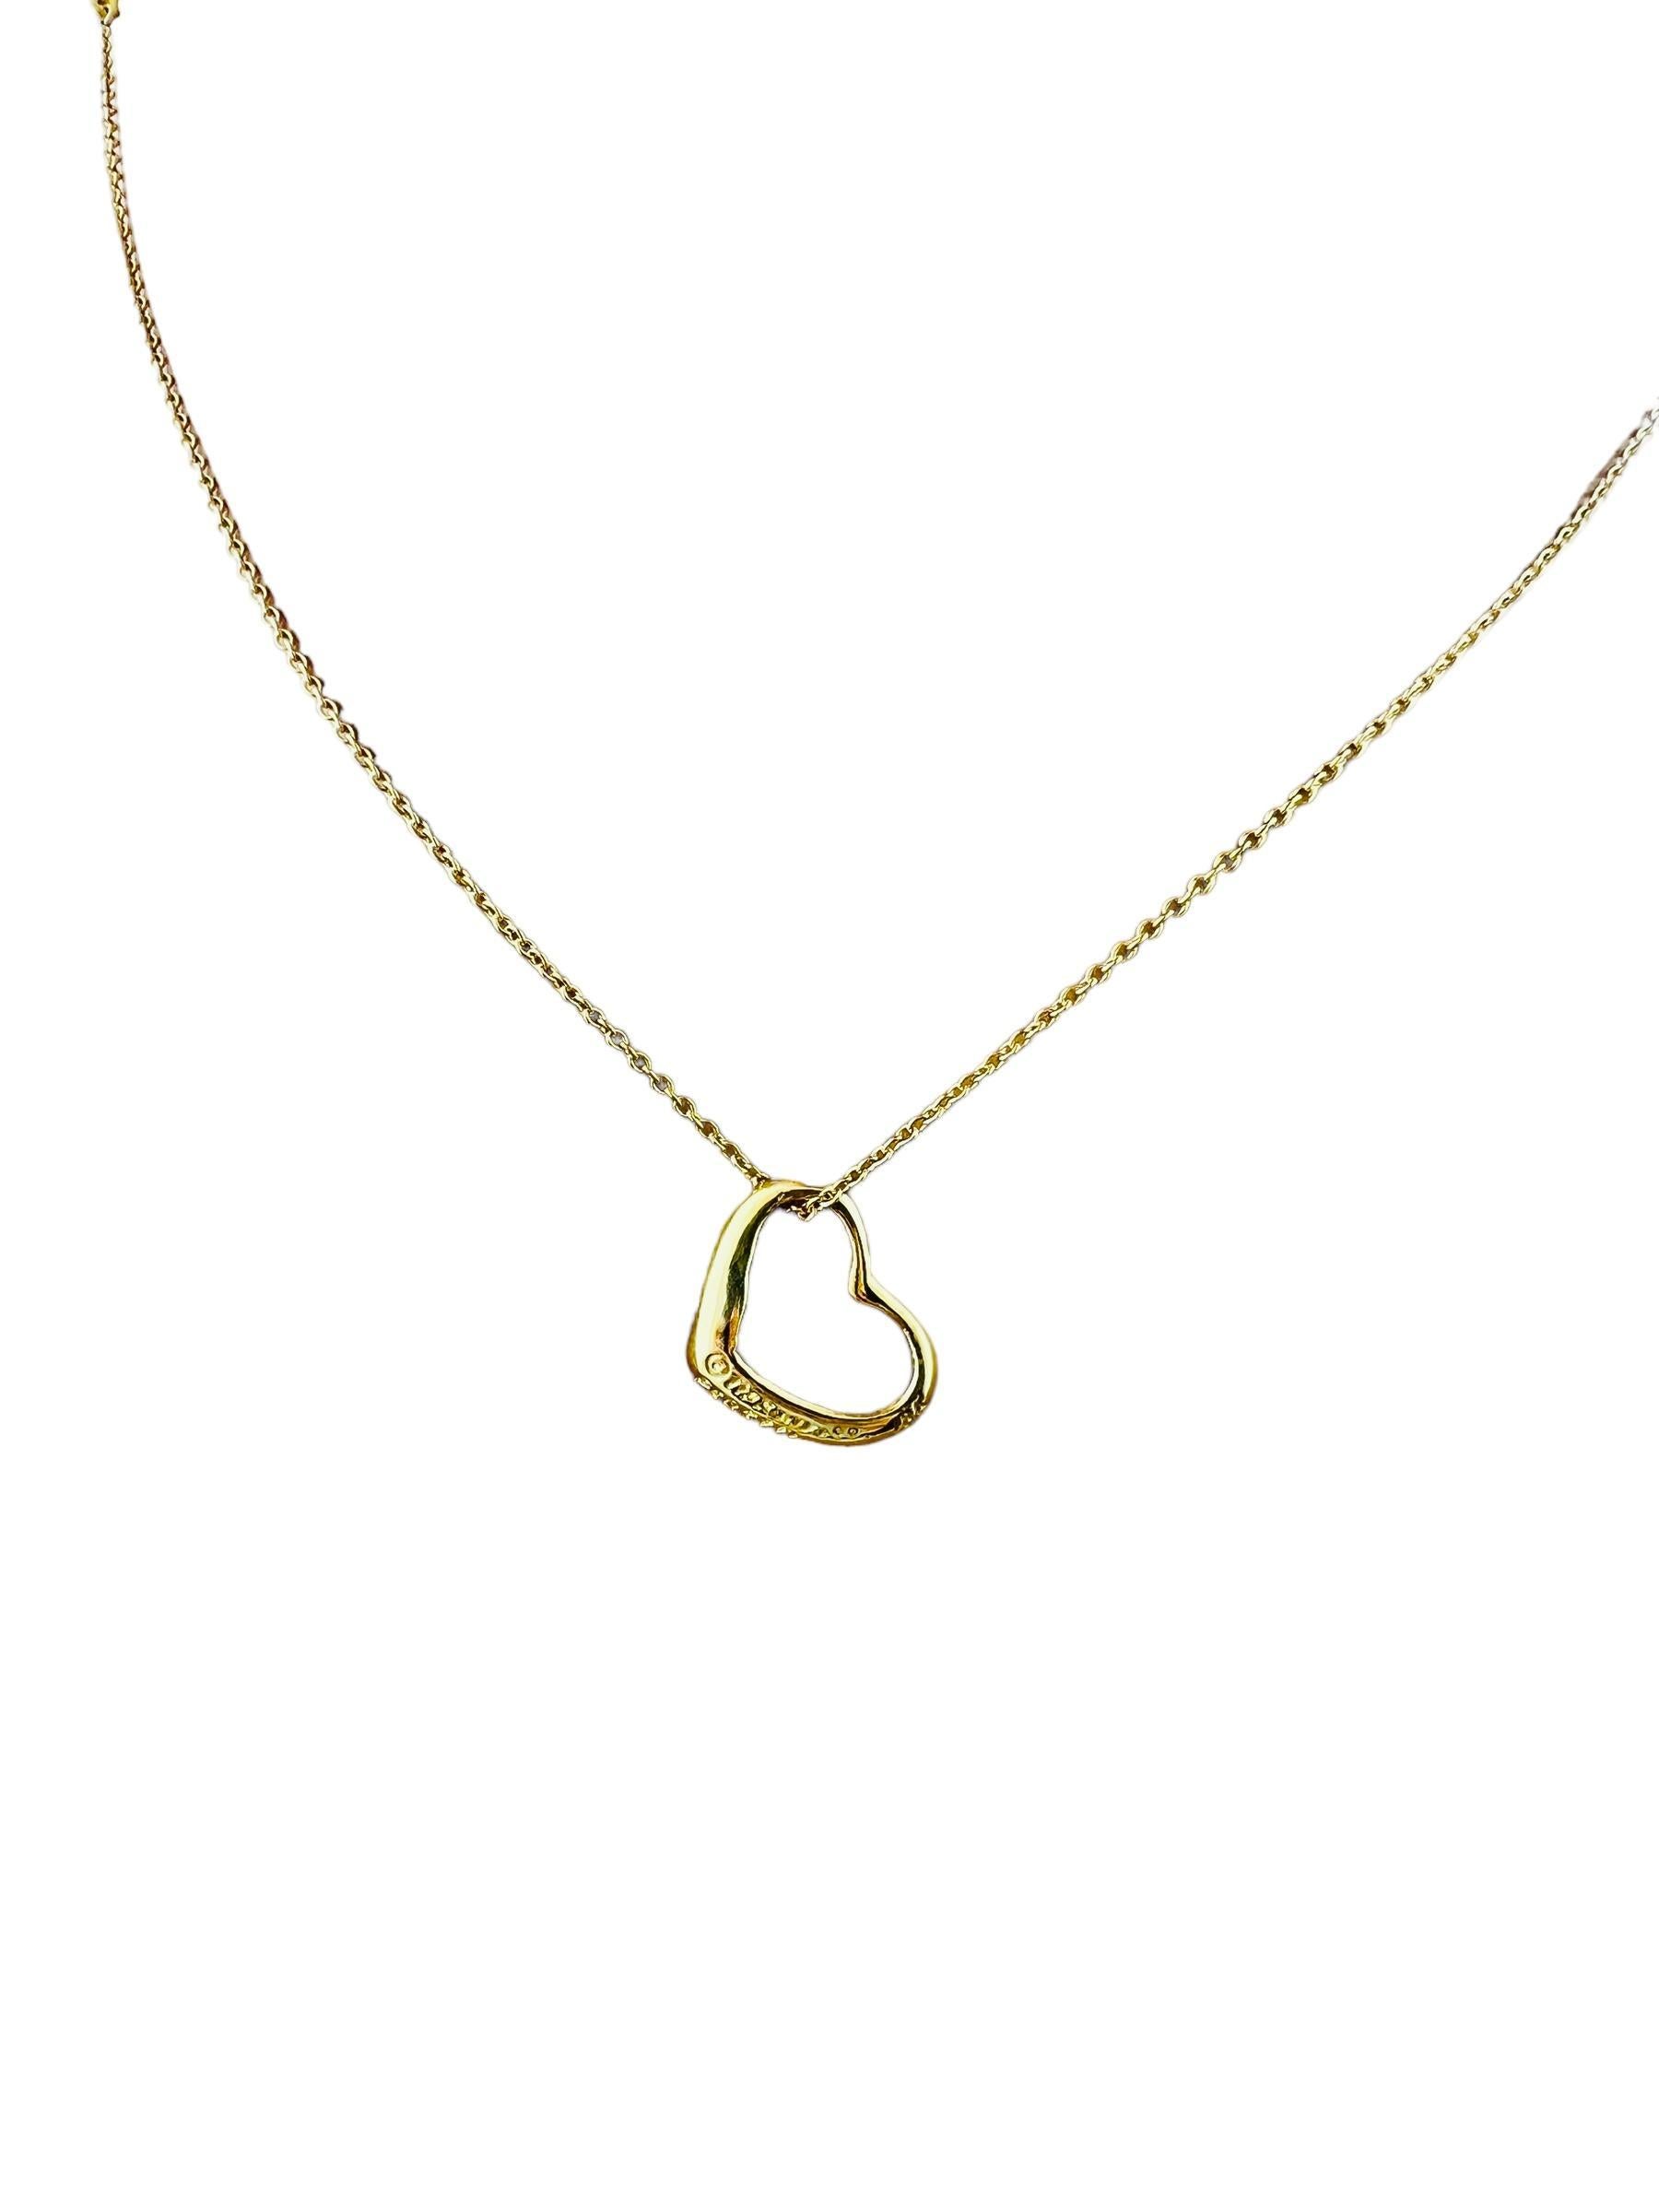 Tiffany & Co. Elsa Peretti 18K Yellow Gold Open Heart Pendant Necklace #15424 2